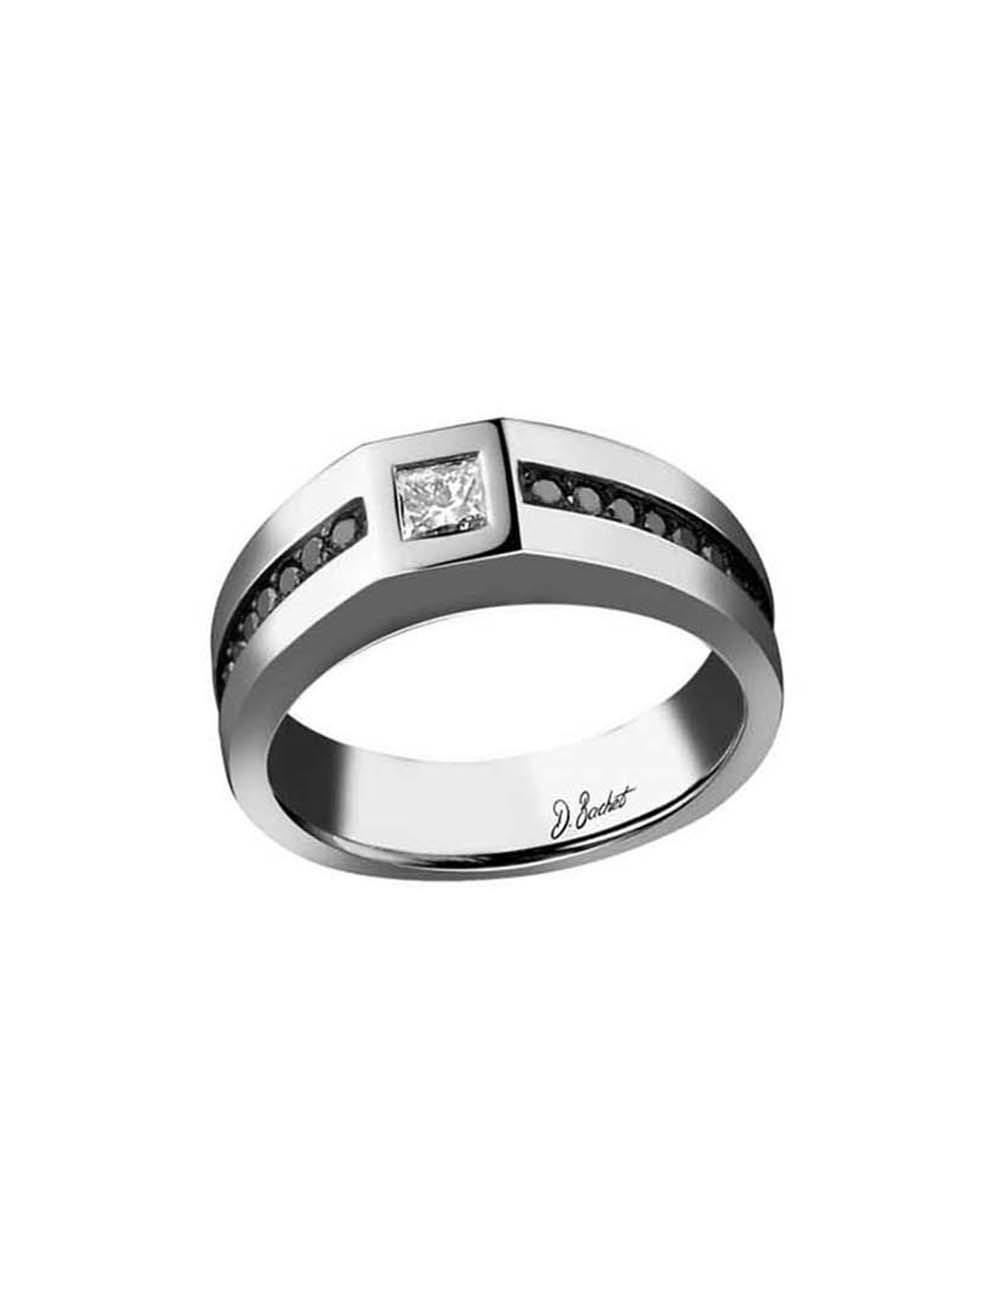 Signet ring for men in platinum, white diamond and black diamonds